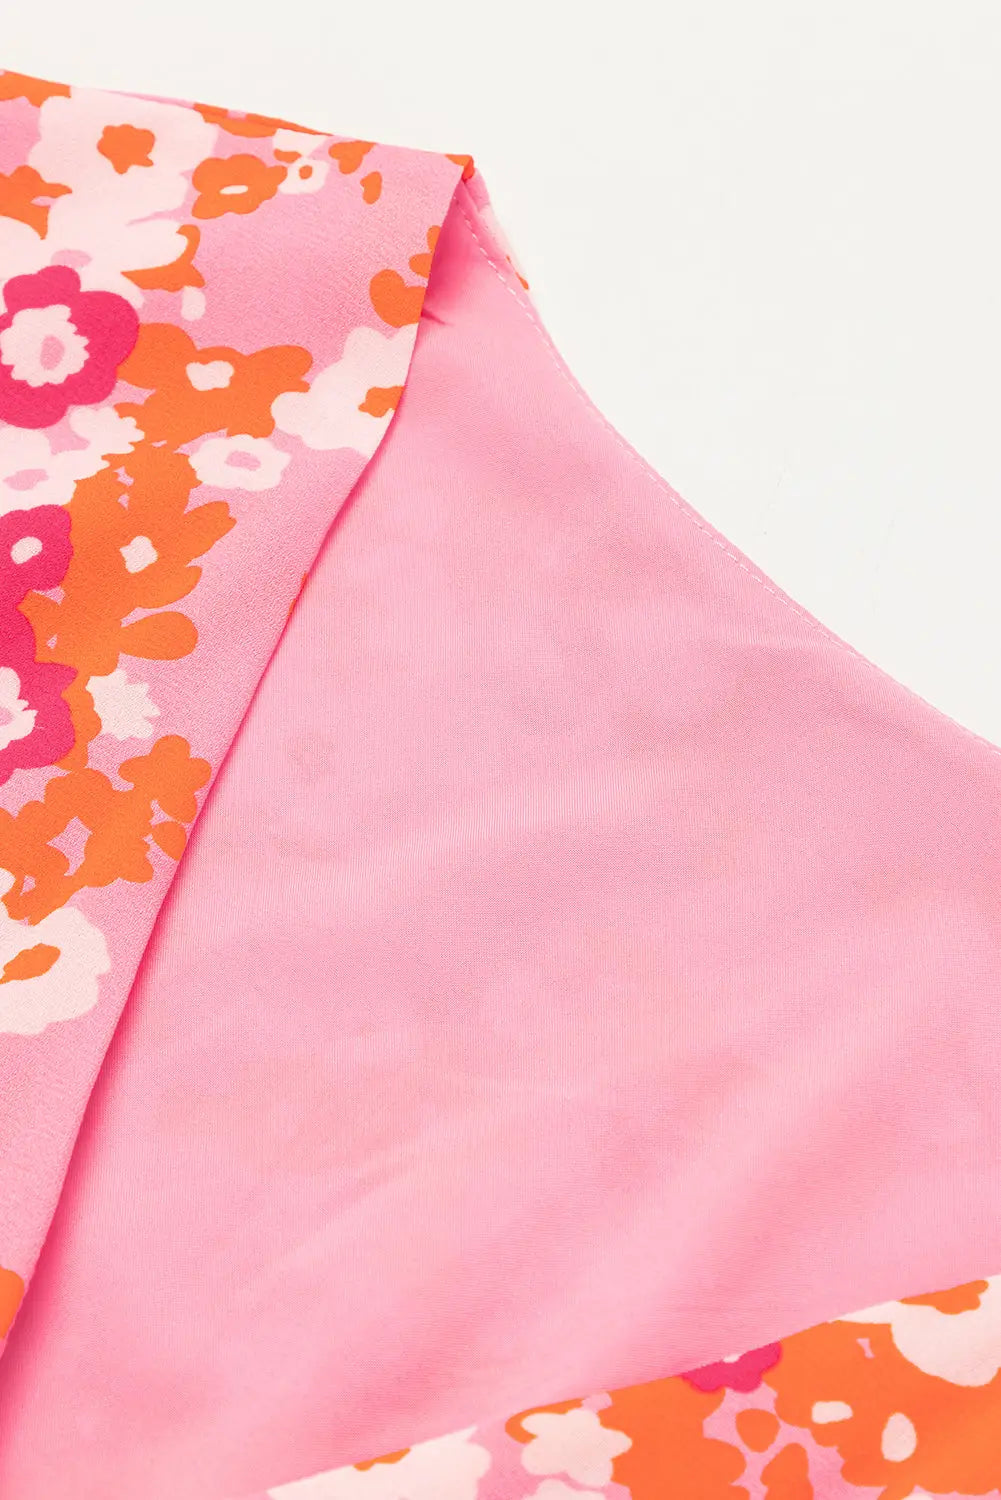 Pink floral v neck short ruffle tiered dress - dresses